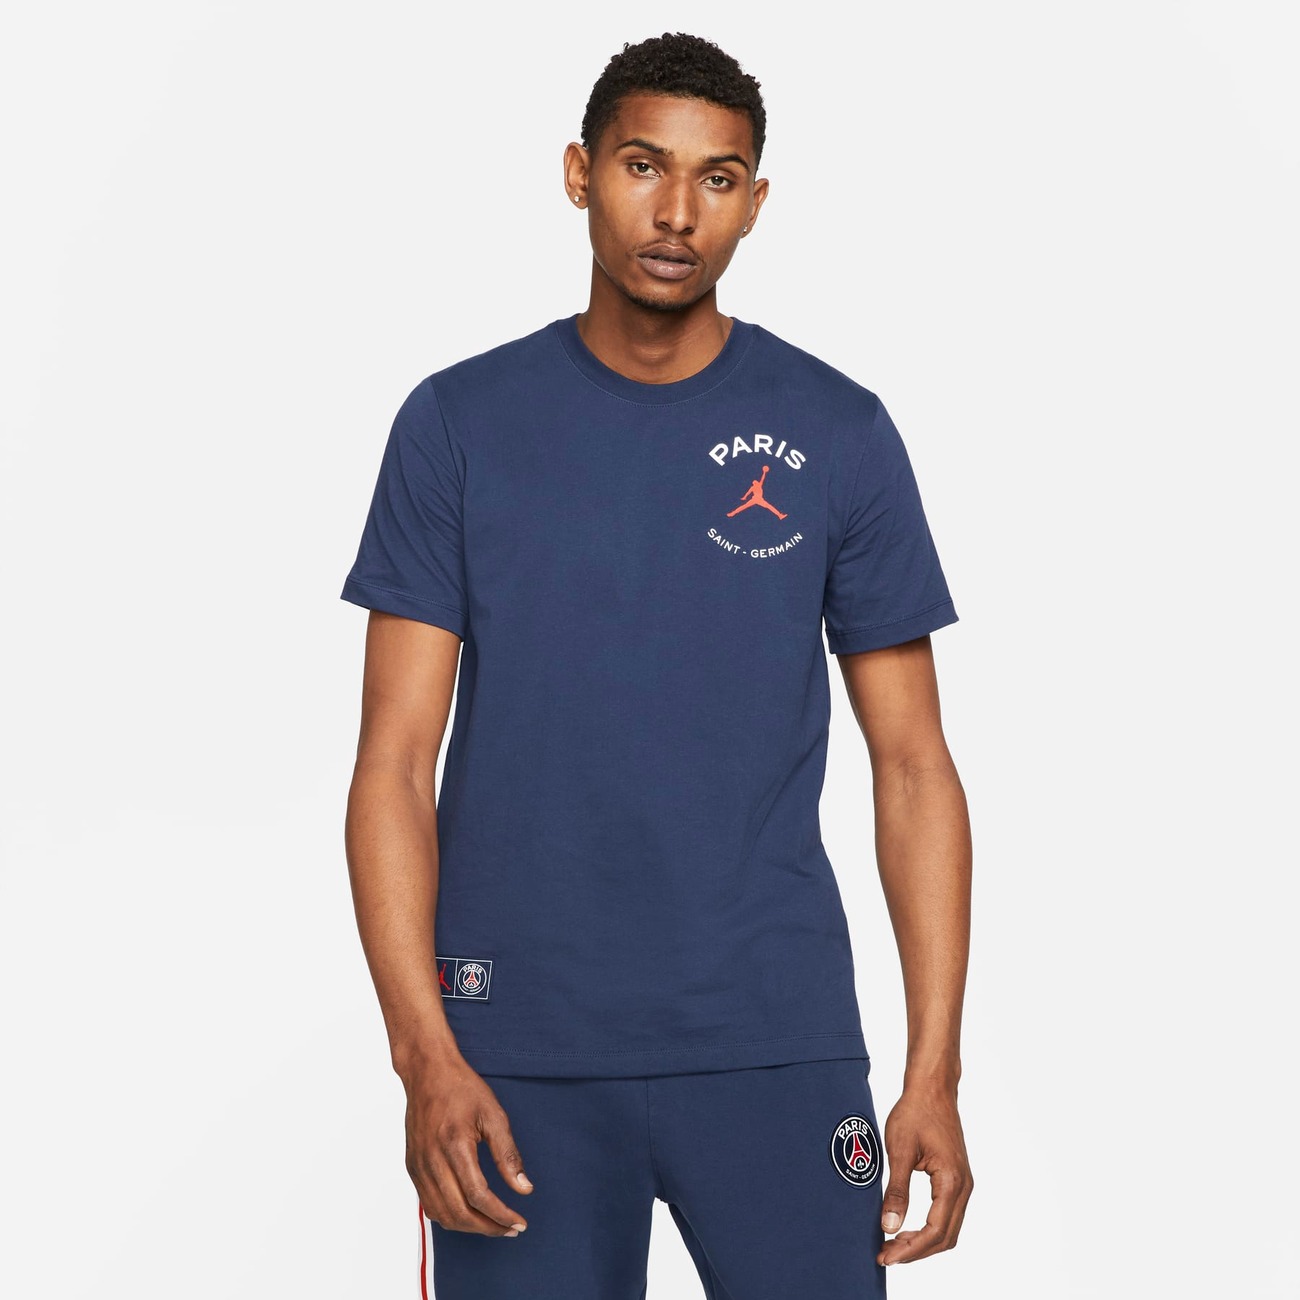 Camiseta Jordan PSG Masculina - Foto 1